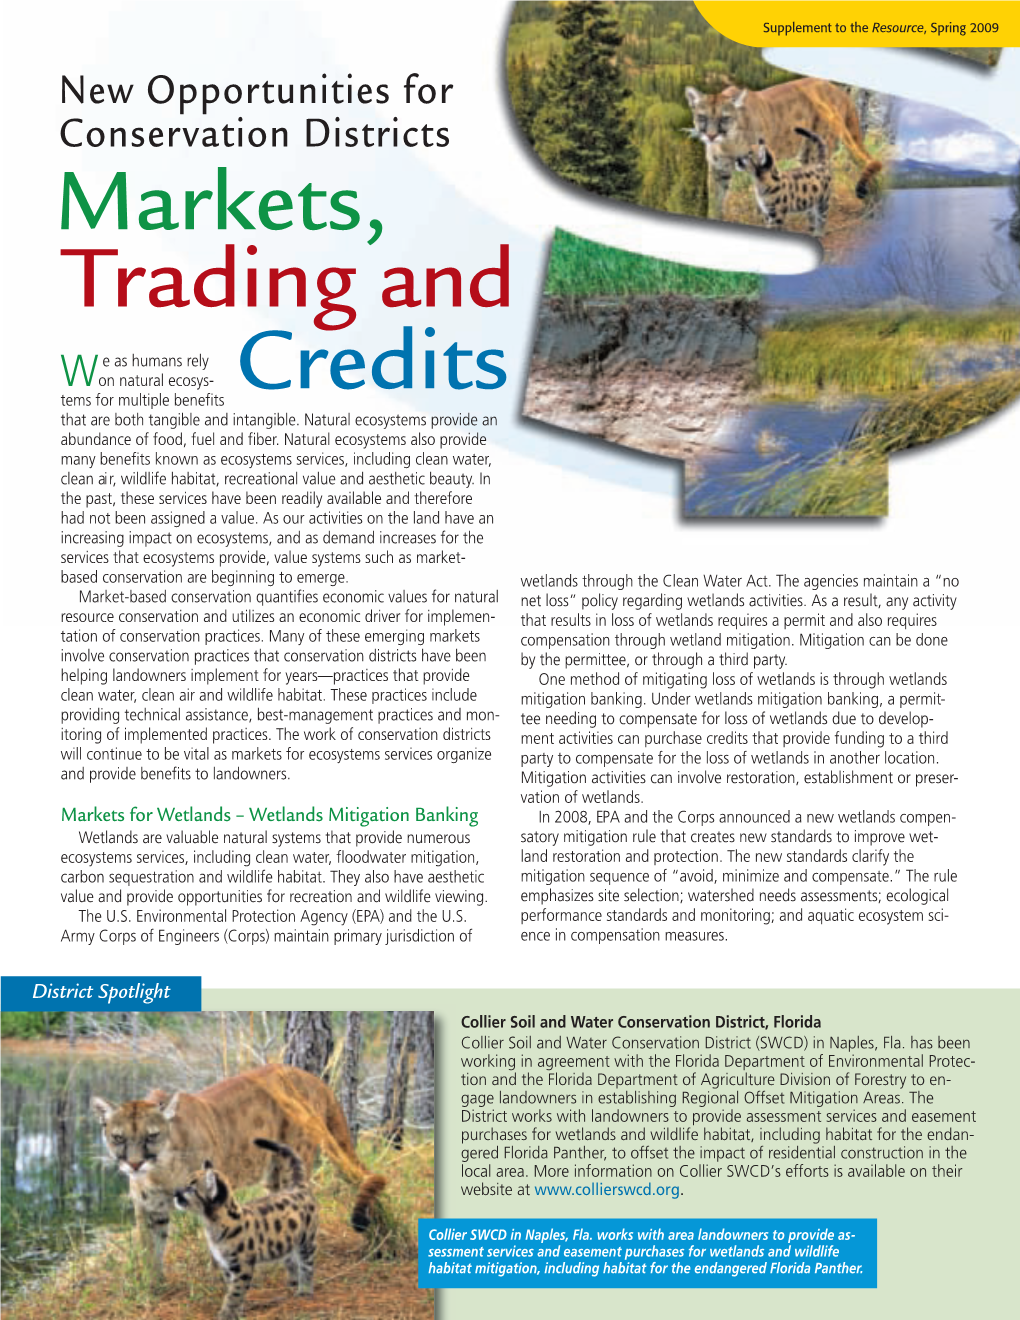 Credits Trading and Markets